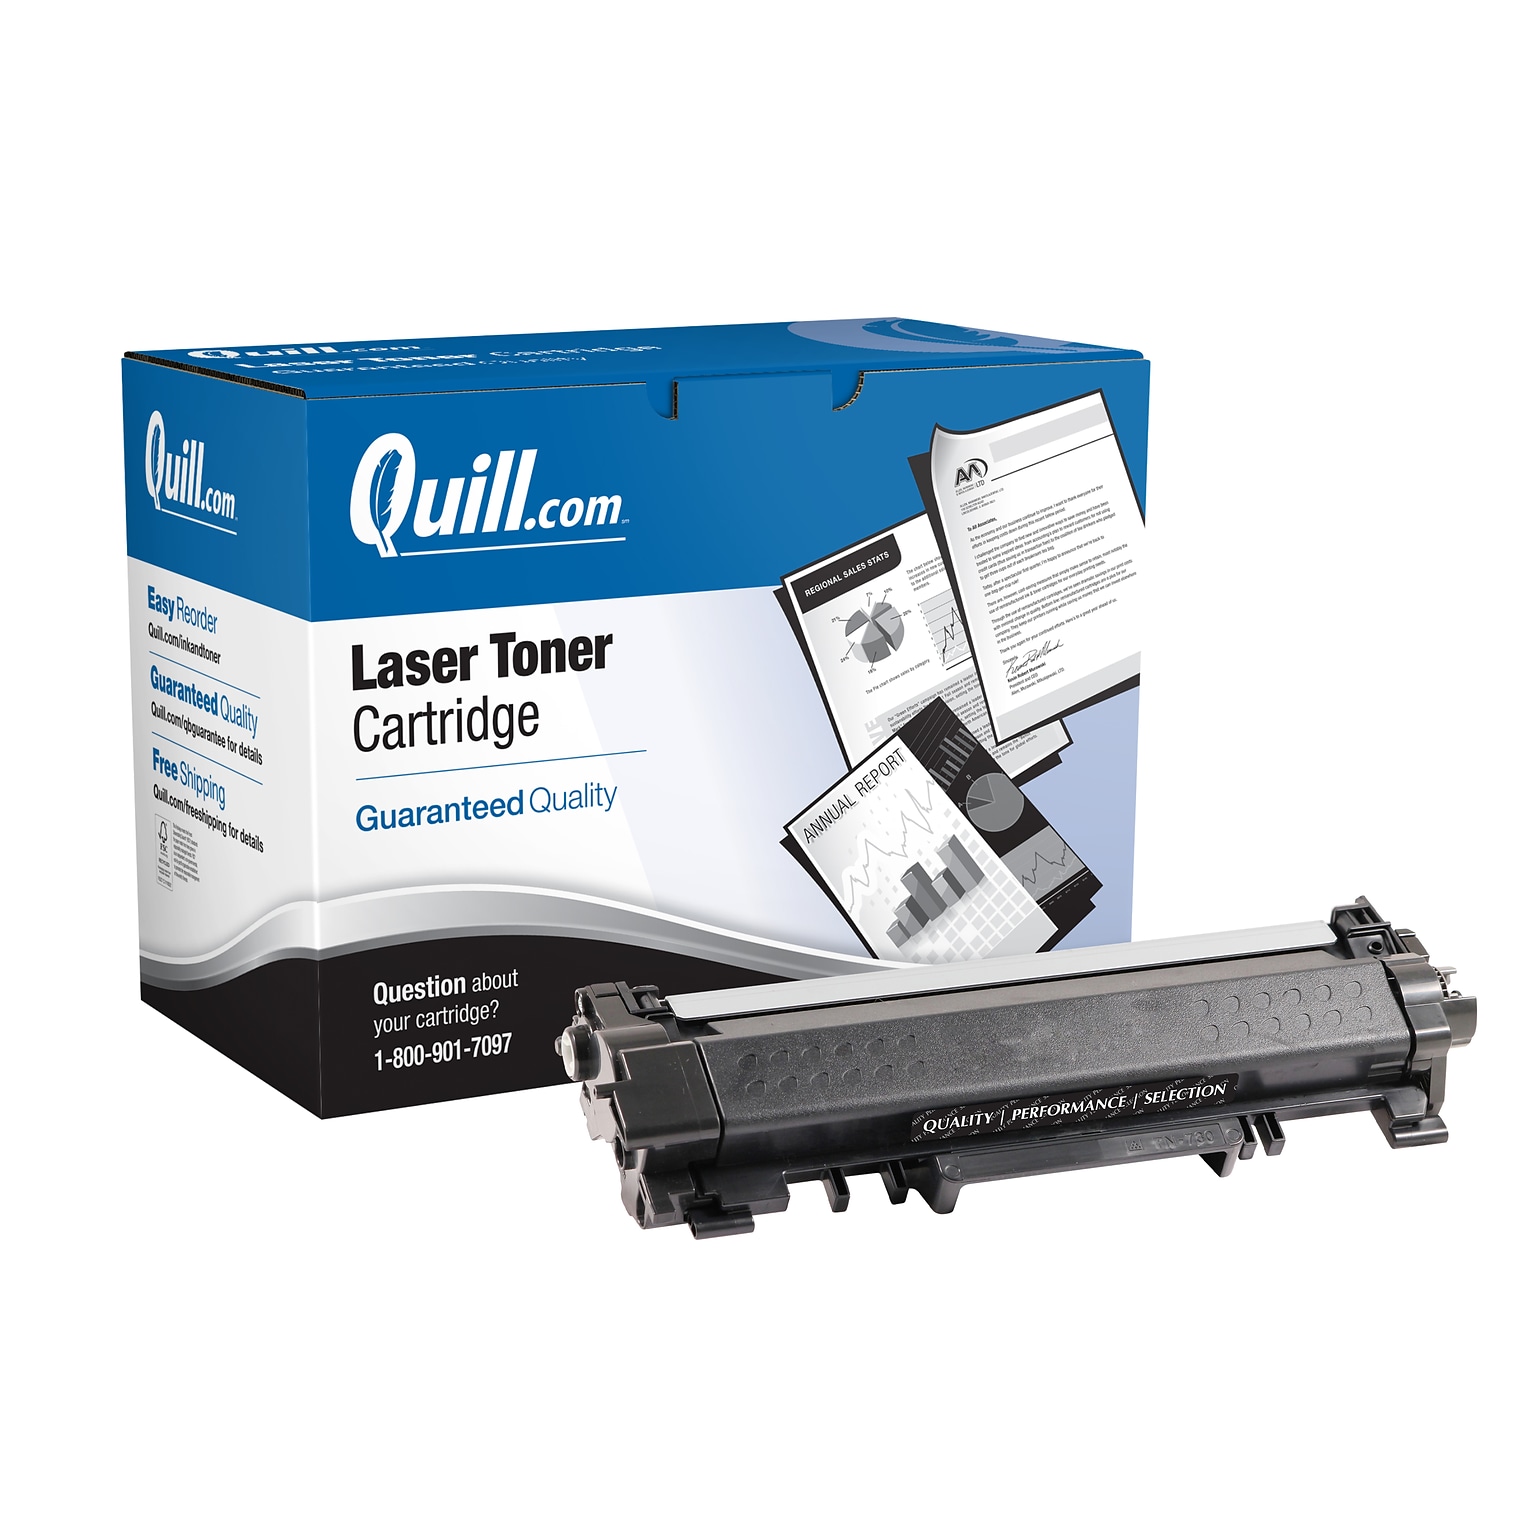 Quill Brand® Brother TN730 Remanufactured Black Laser Toner Cartridge, Standard Yield (TN730)